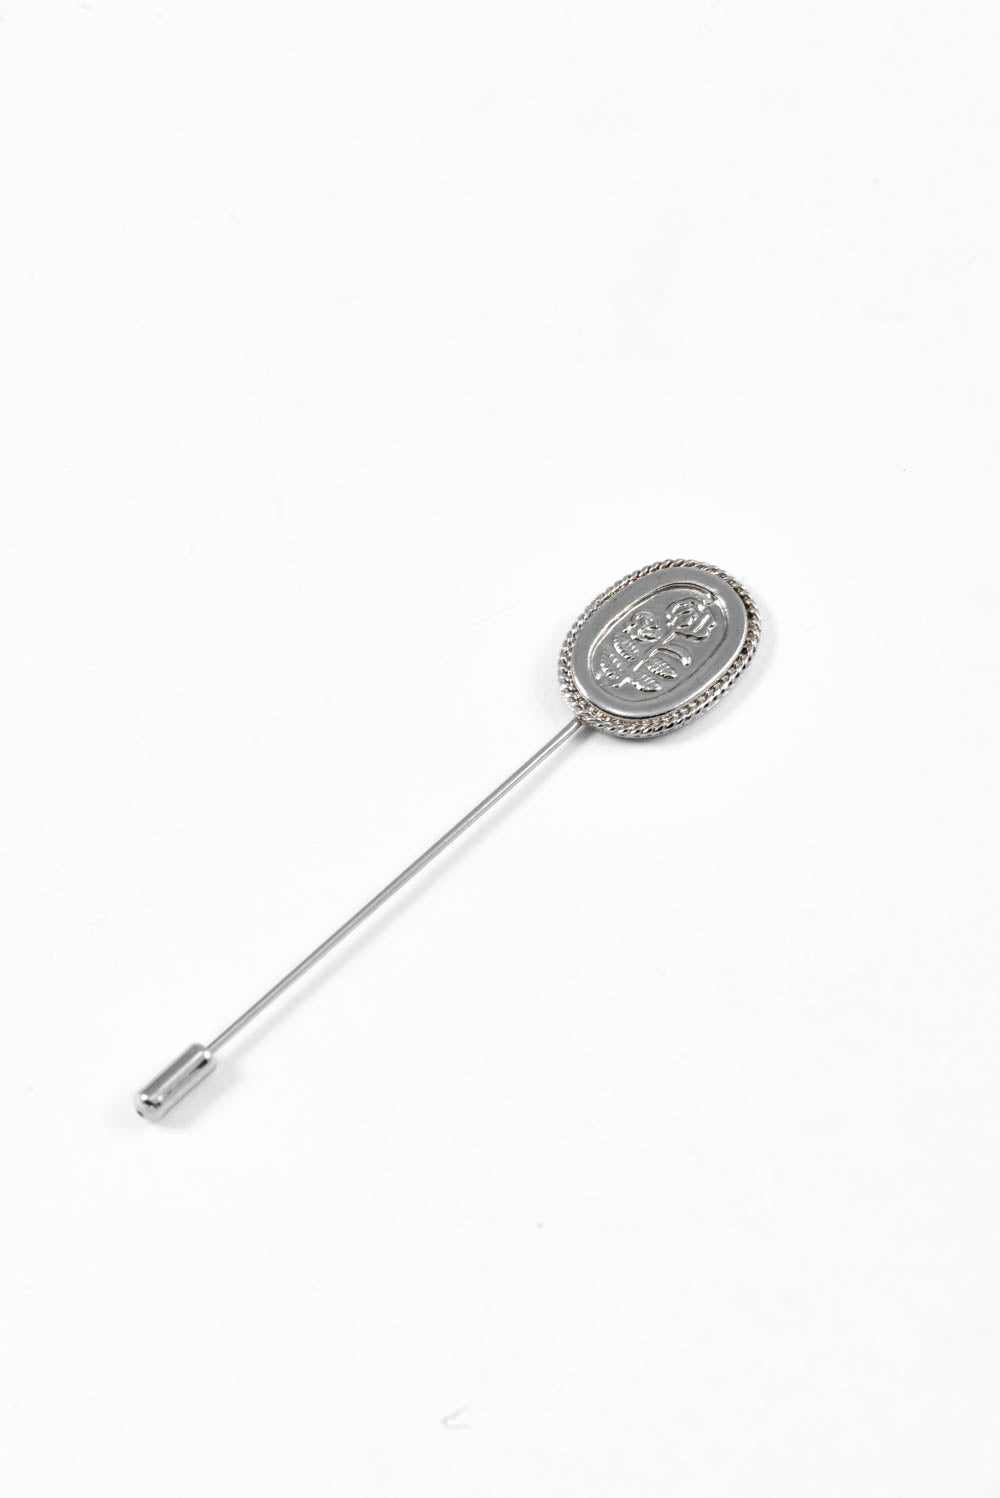 Amama,SubRosa Lapel Pin in Silver